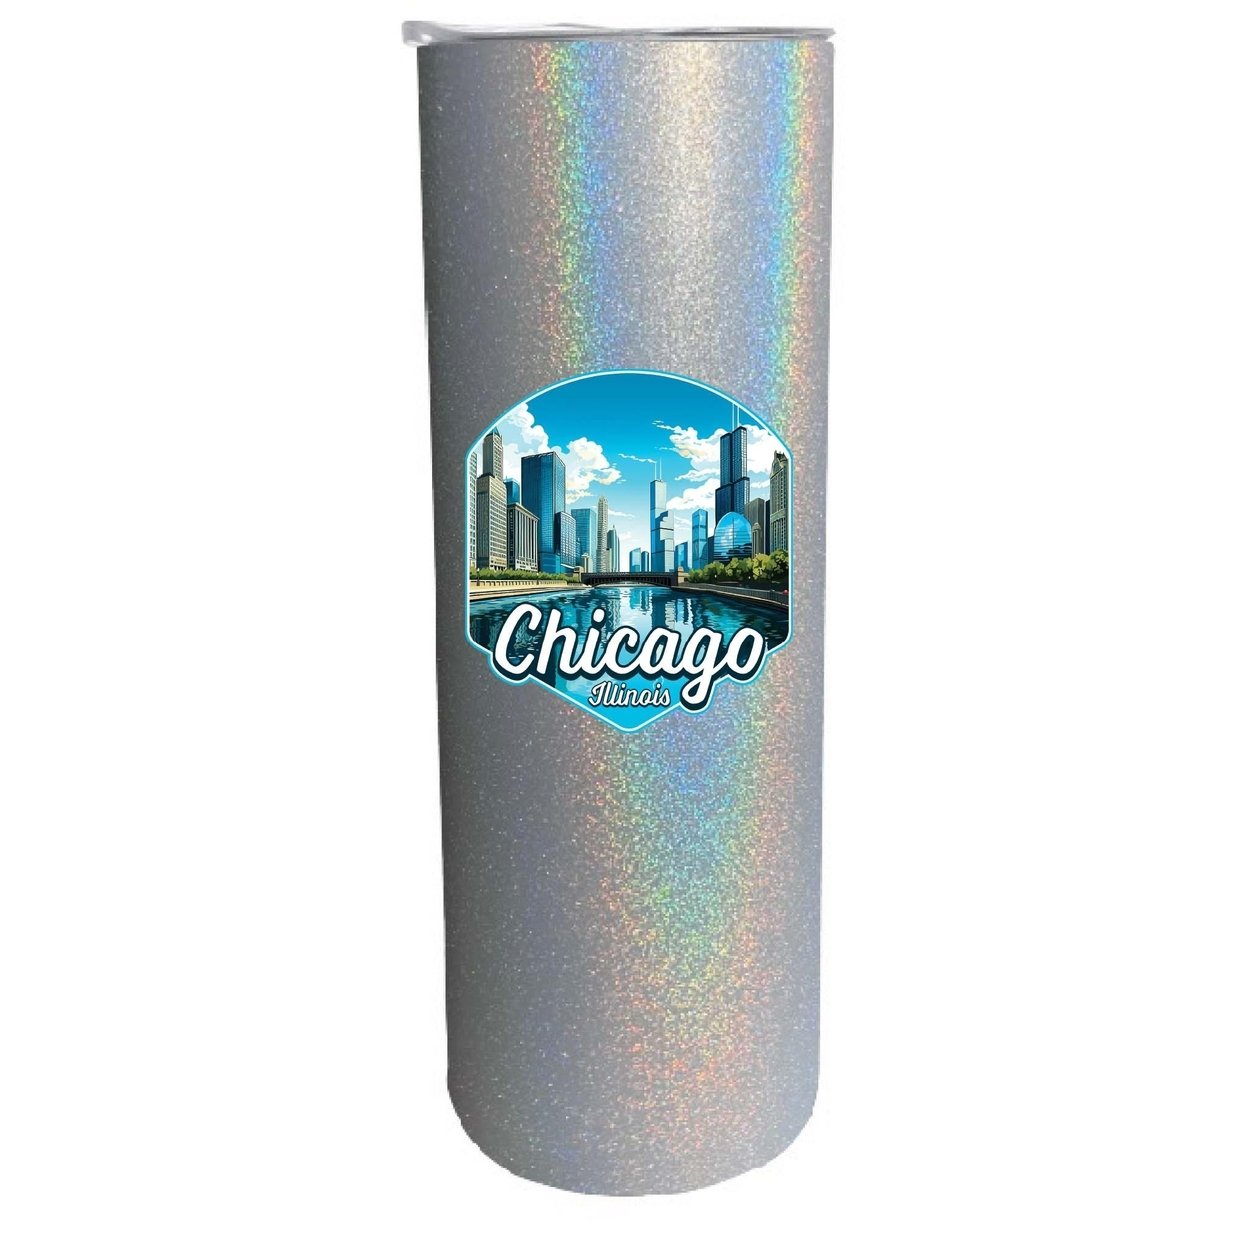 Chicago Illinois A Souvenir 20 Oz Insulated Skinny Tumbler - Gray Glitter,,Single